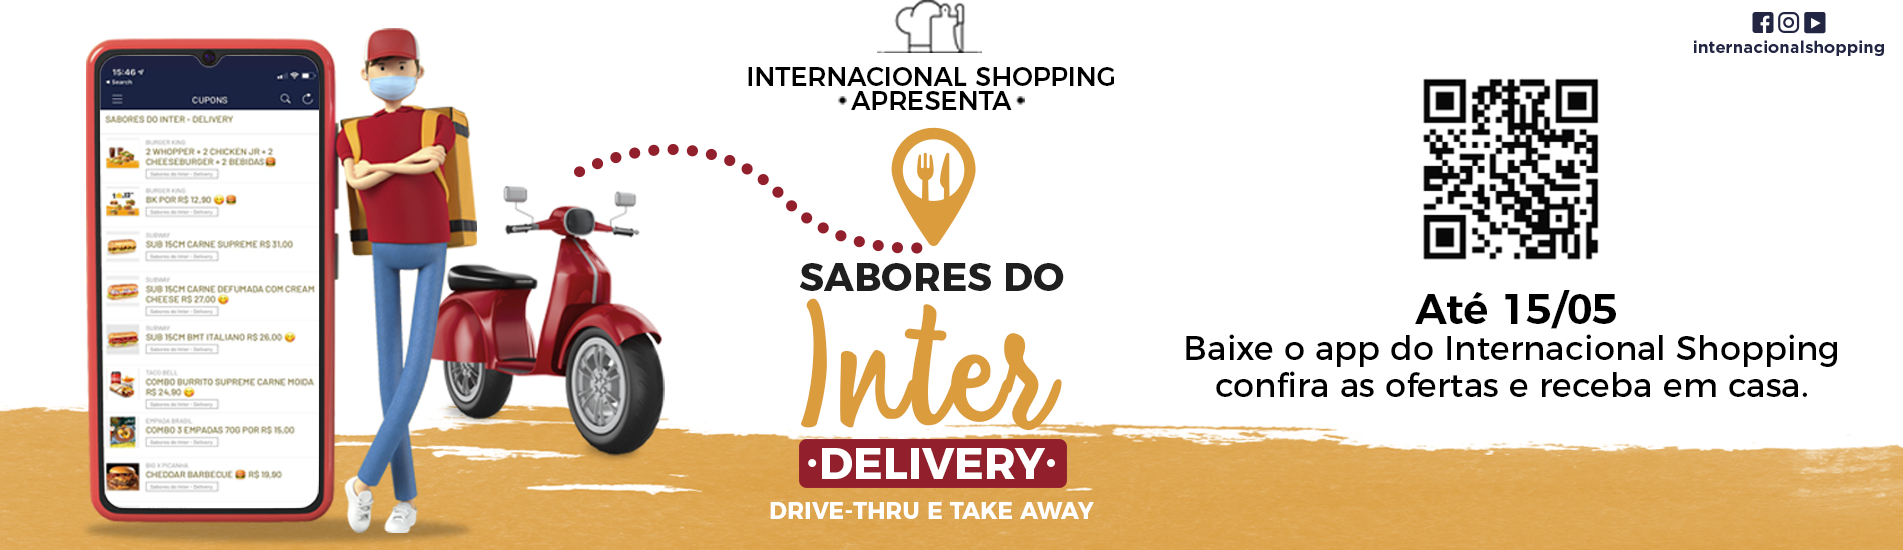 Sabores do Inter Delivery 